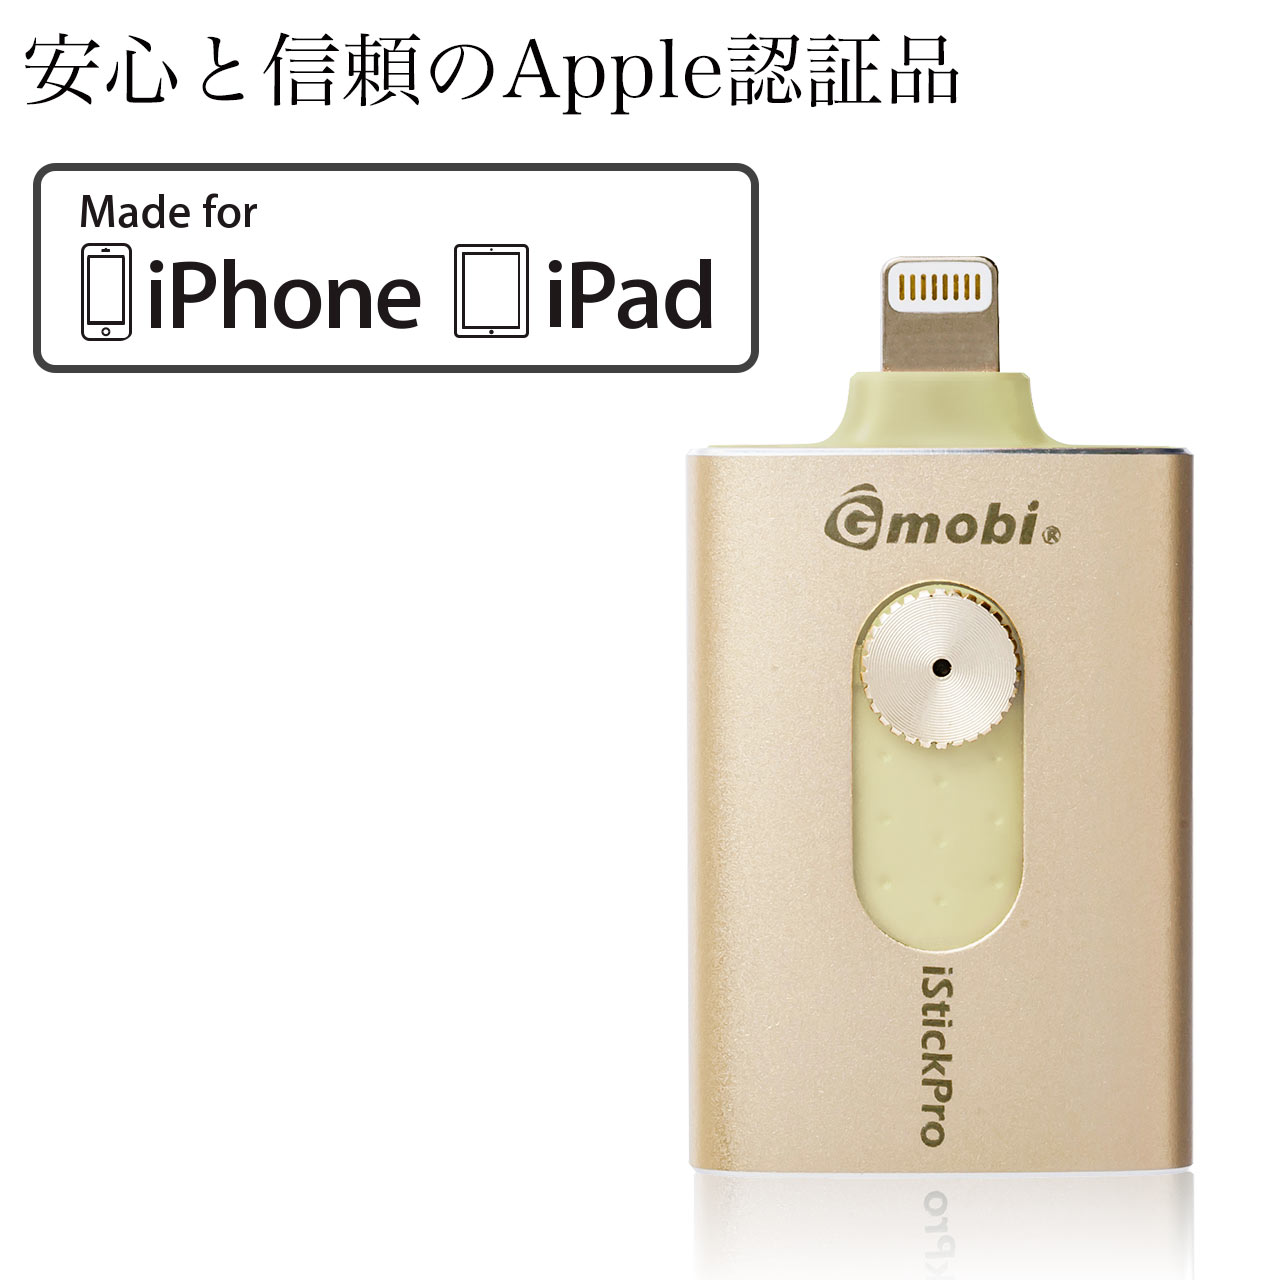 iPhoneEiPad USB 32GBiUSB3.0ELightning/microUSBΉEMFiF؁EiStickPro 3.0ES[hj 600-IPL32GA3